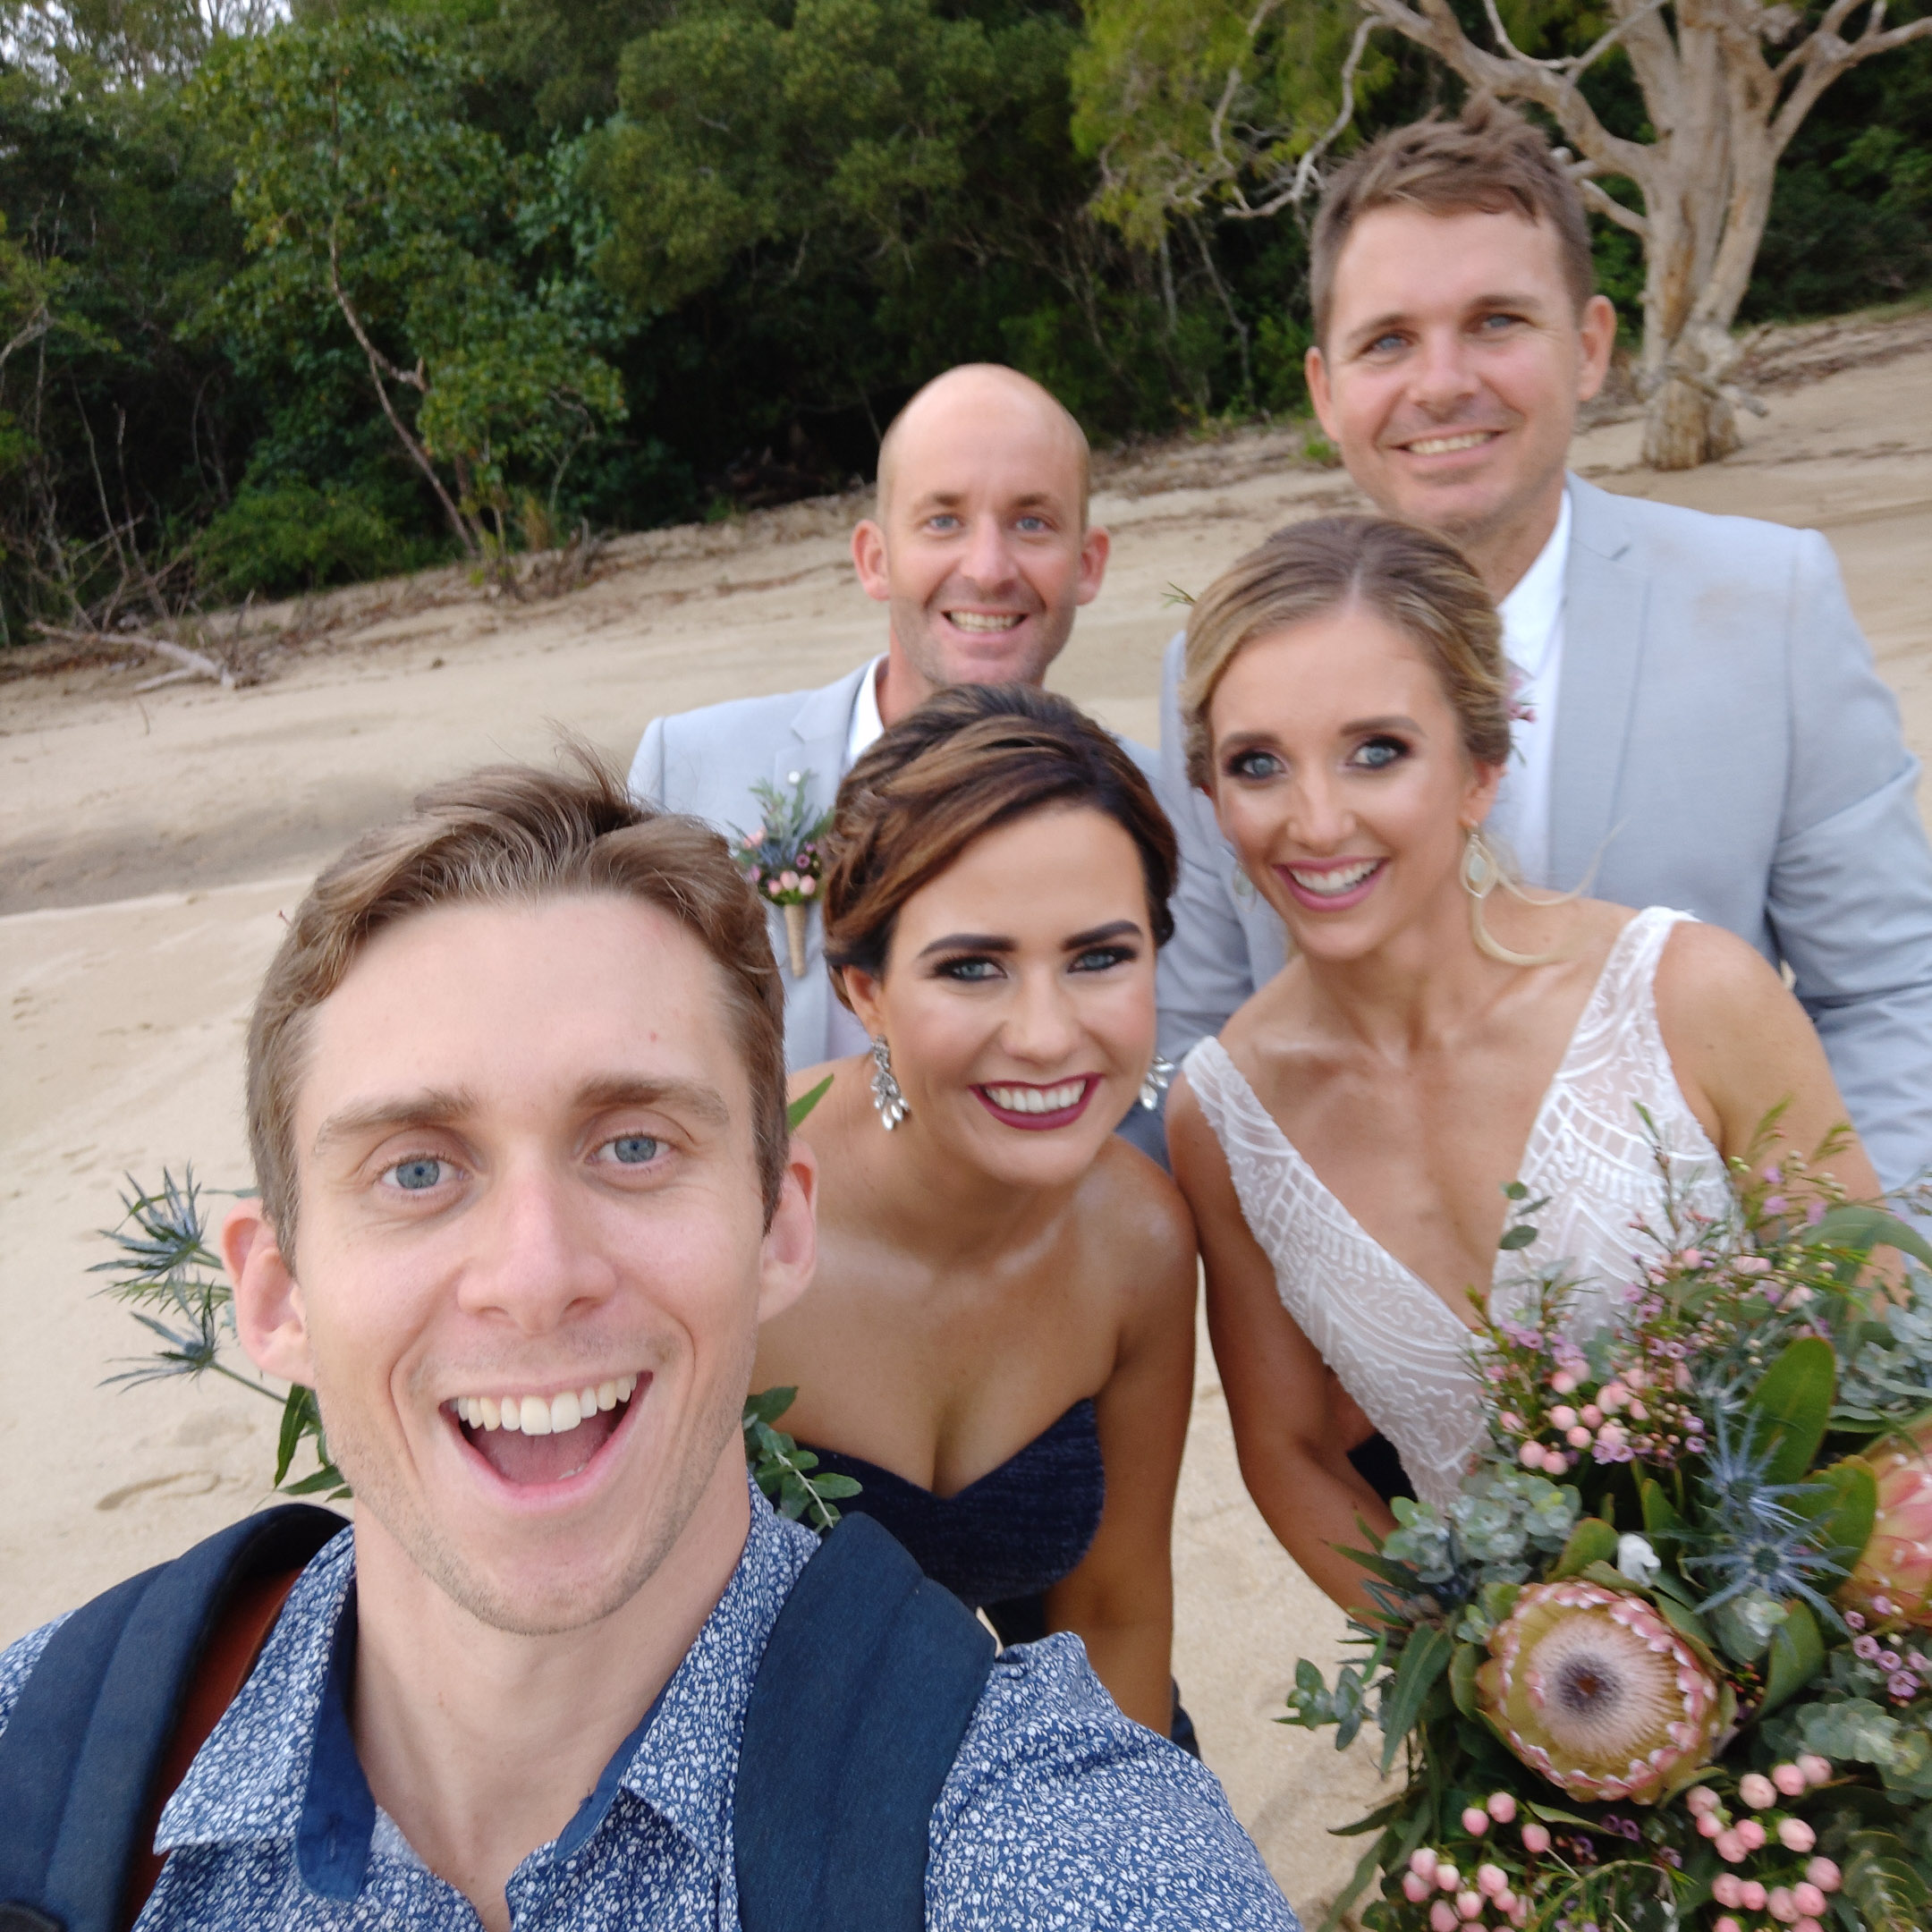 The-raw-photographer-cairns-wedding-photography-bridalparty-selfie-6.jpg